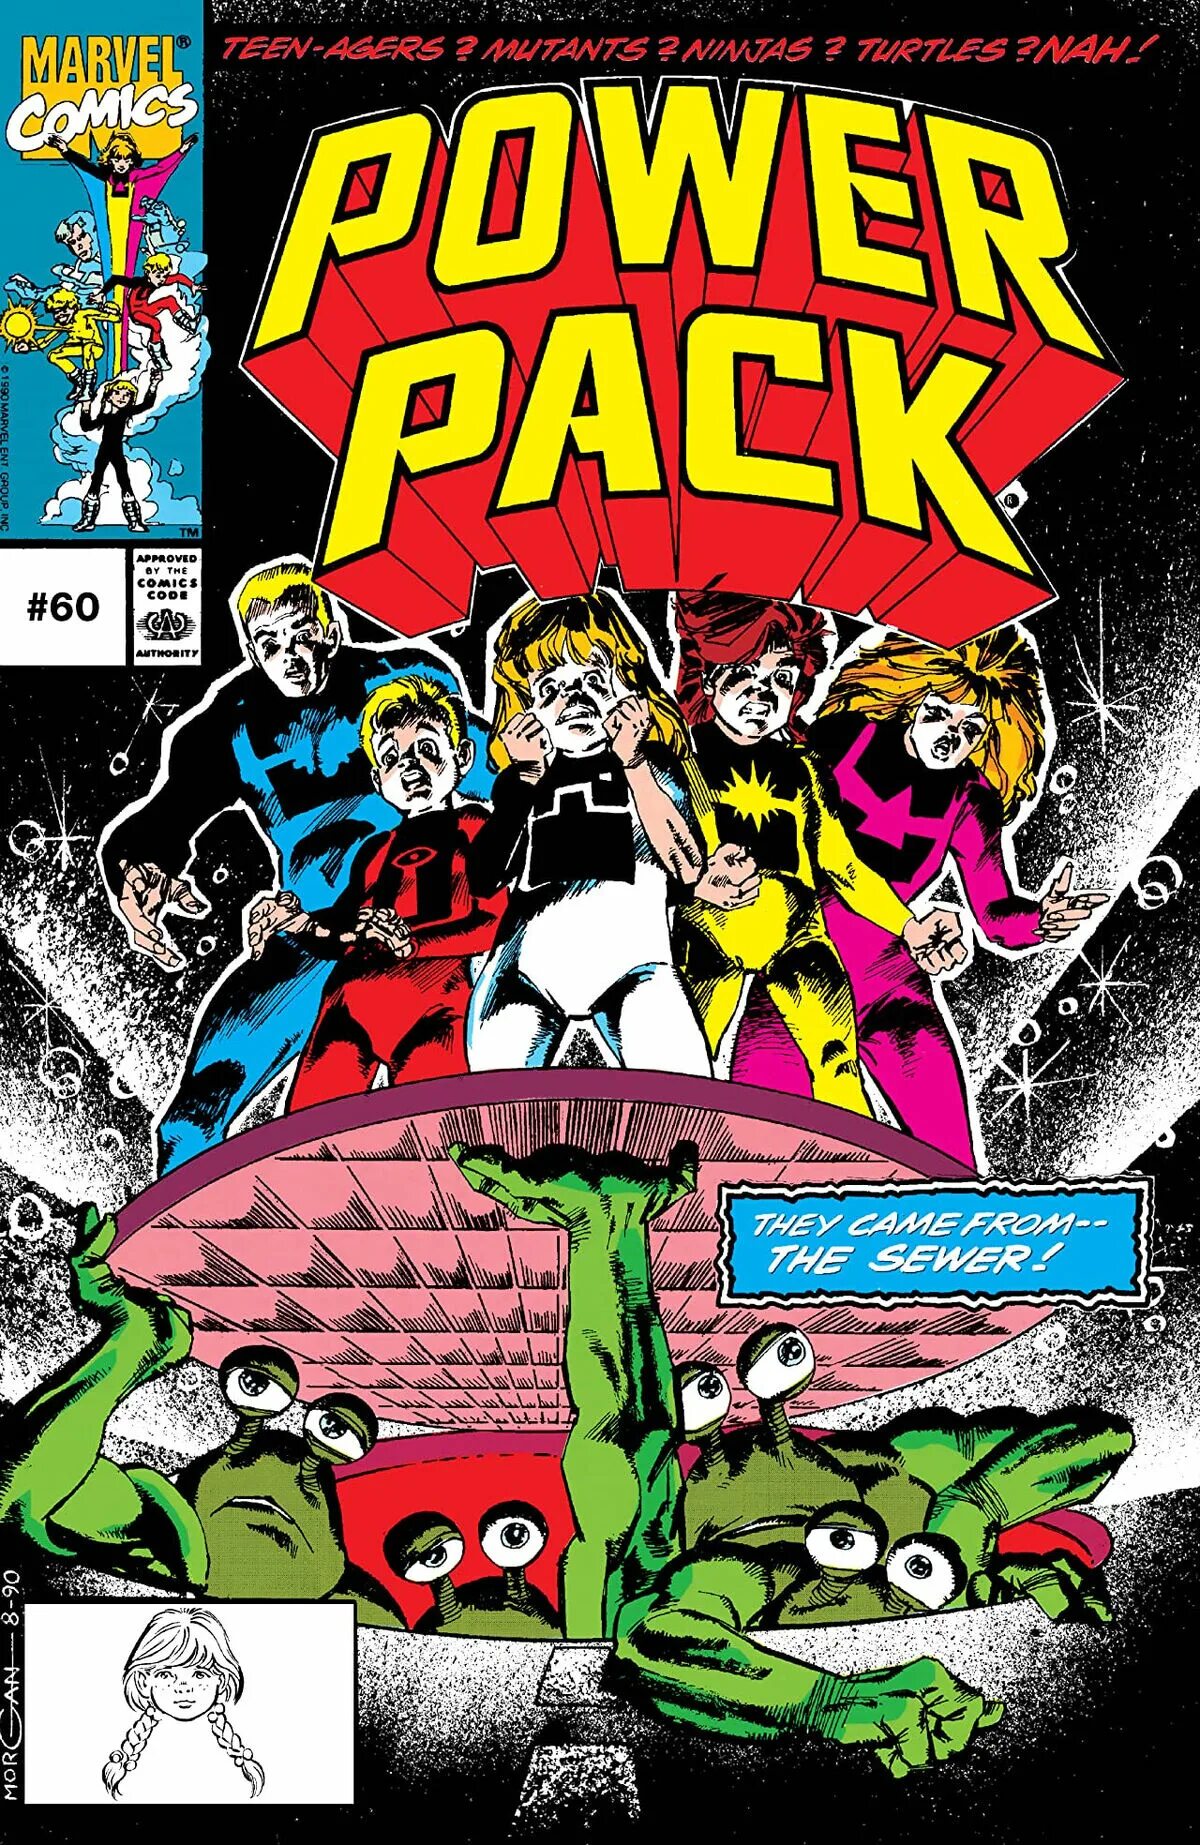 Паки марвел. Power Pack Marvel. POWERPACK комиксы. Power Pack Marvel Comics.